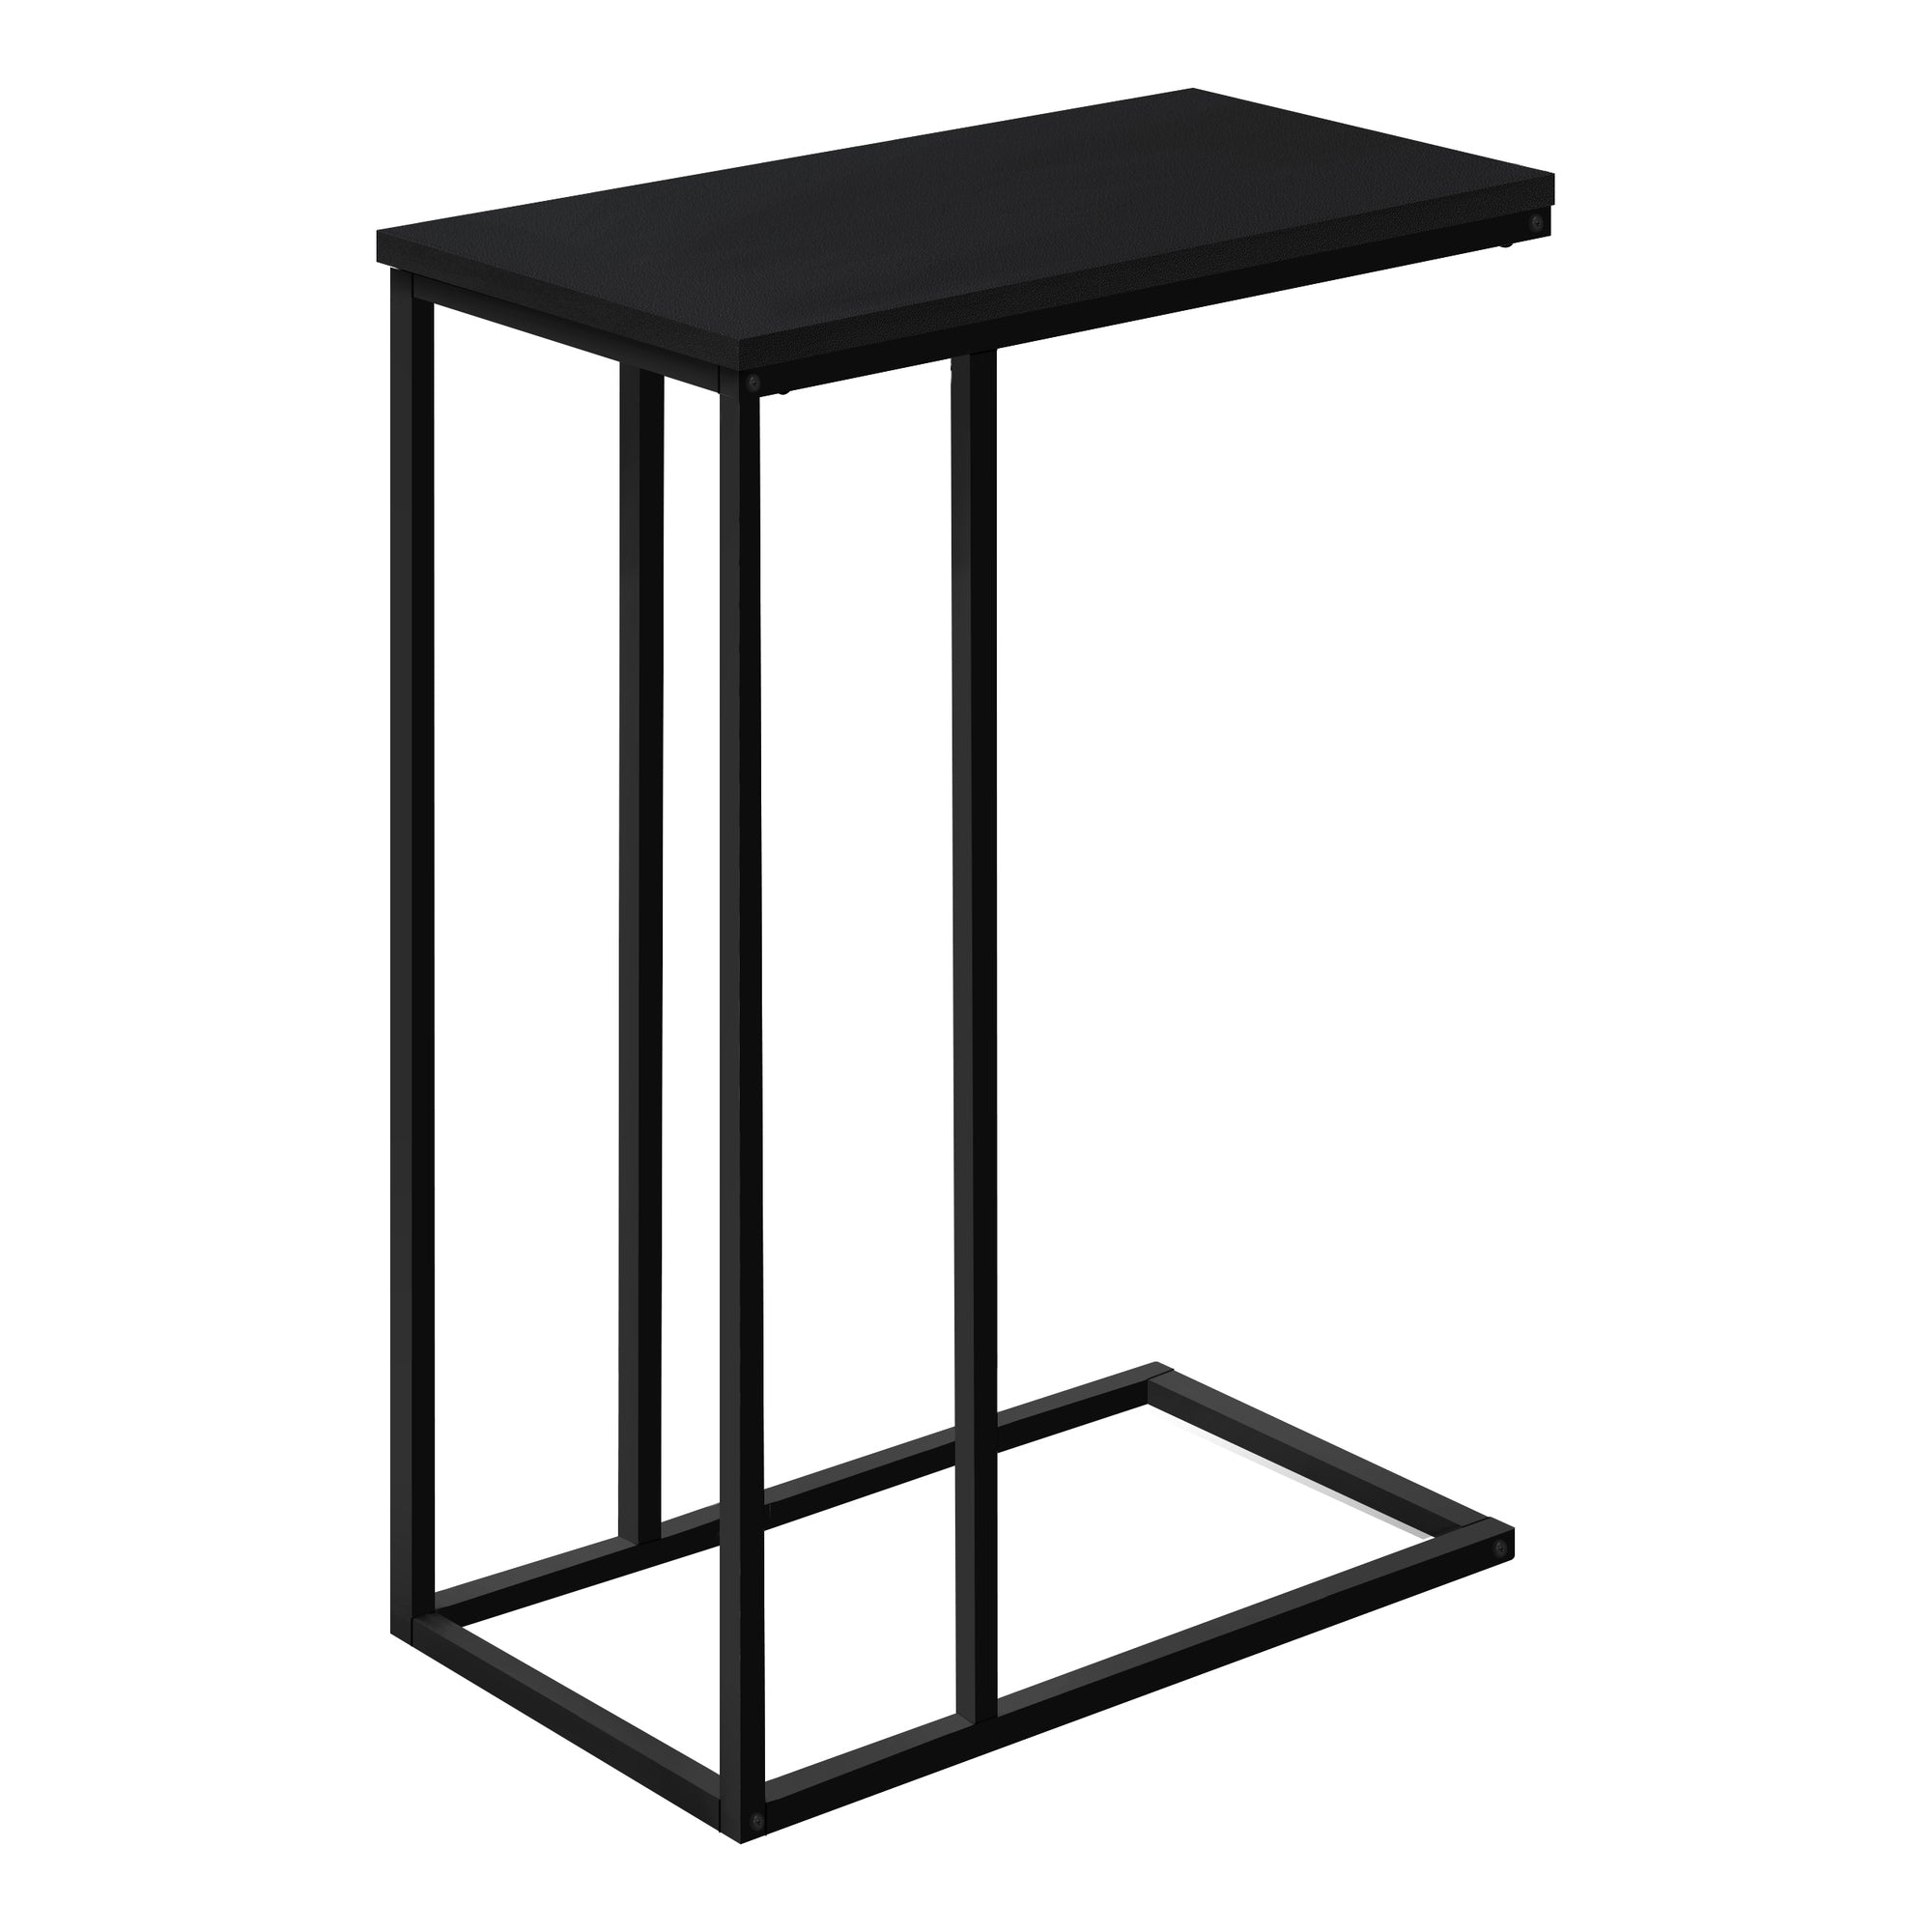 MN-413761    Side Table / C Table - Rectangular / Metal Frame - Black